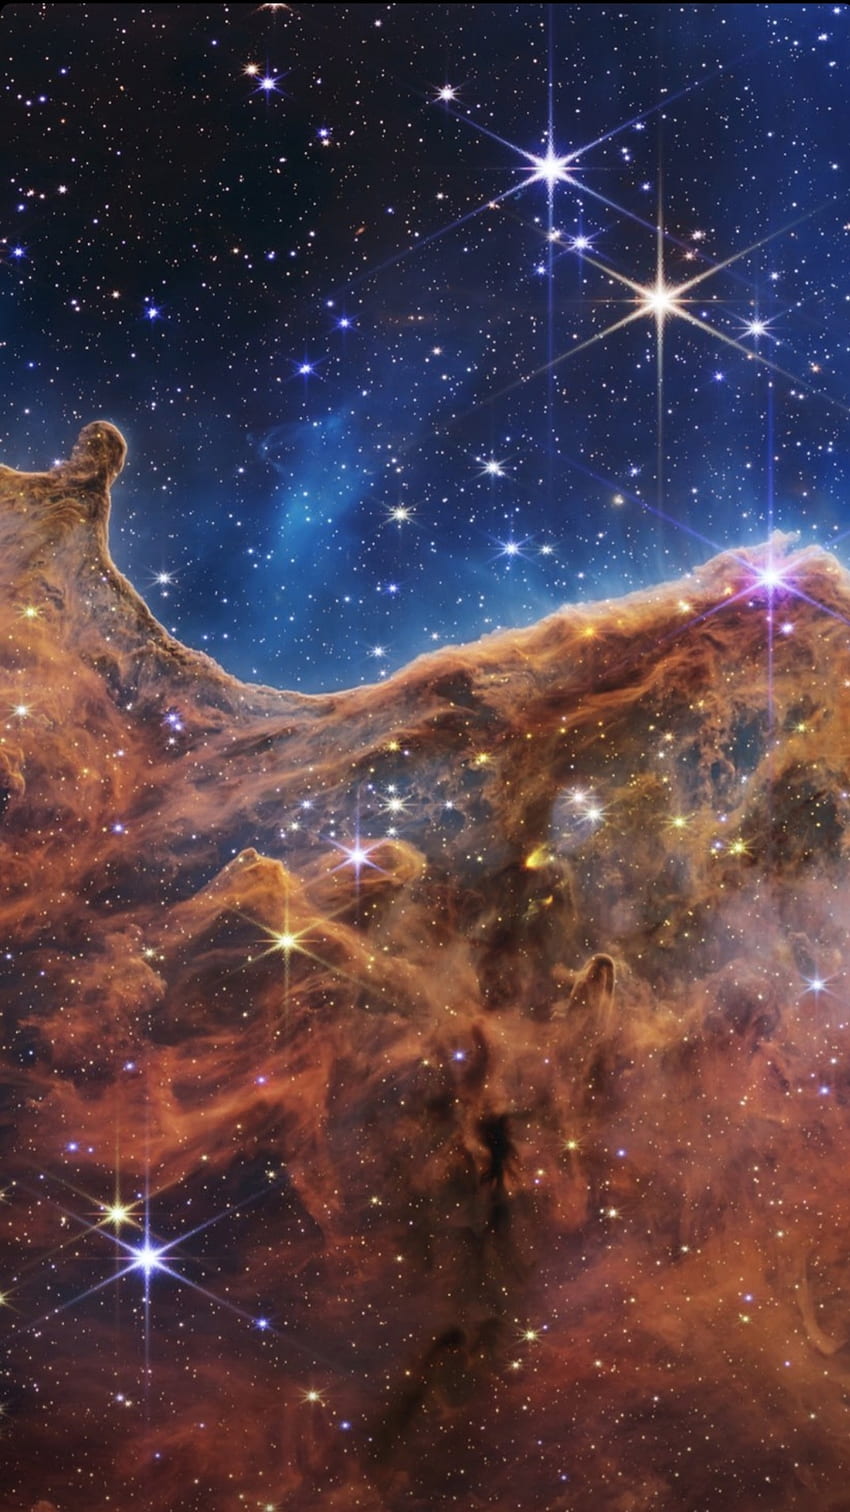 James Webb Space Telescope first images See the stunning photos including  Carina Nebula  Mashable